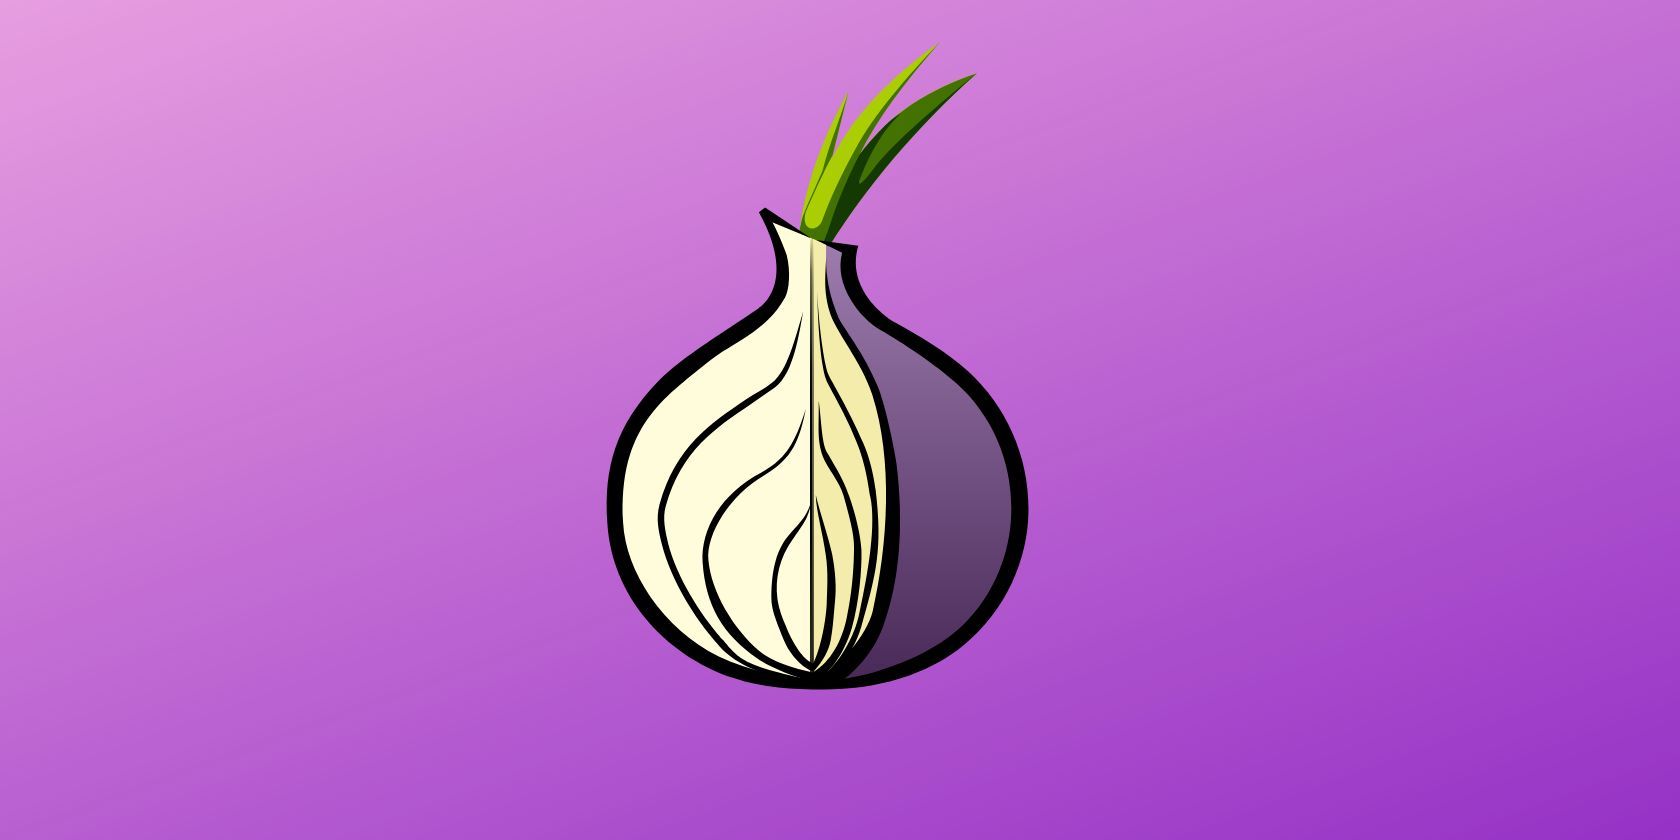 Tor logo seen on purple background 